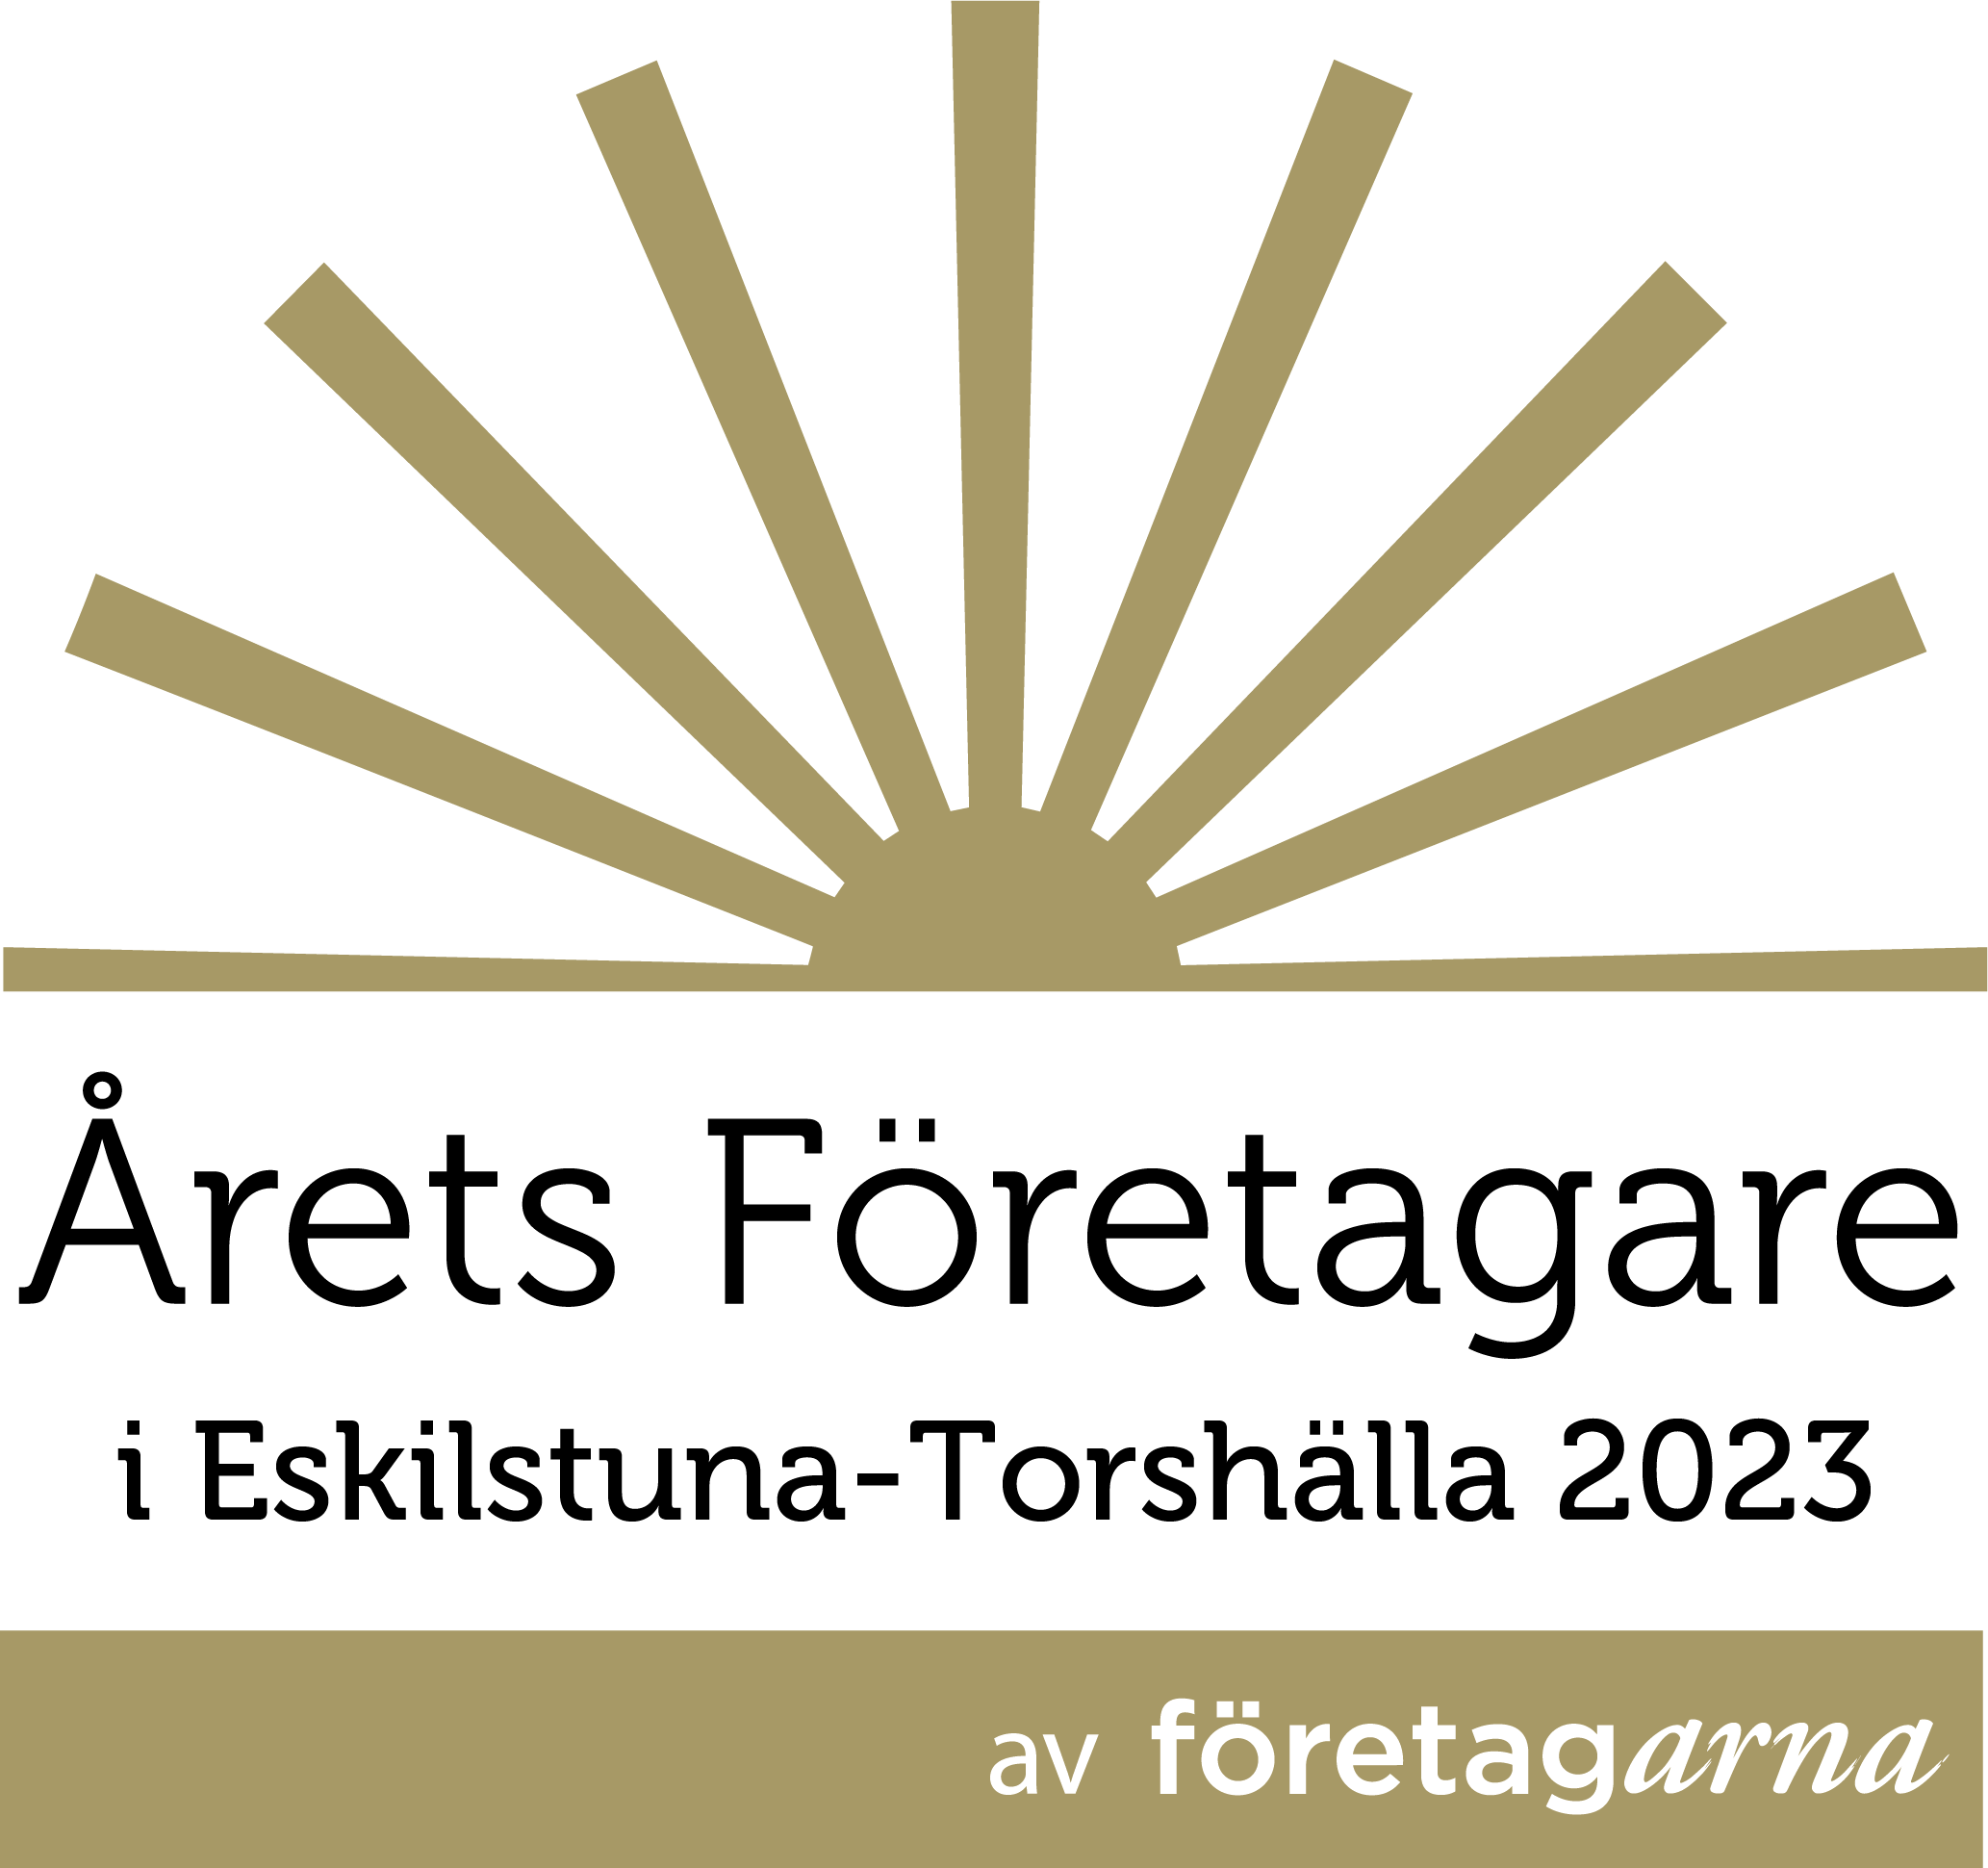 Årets Företagare Eskilstuna-Torshalla 2023